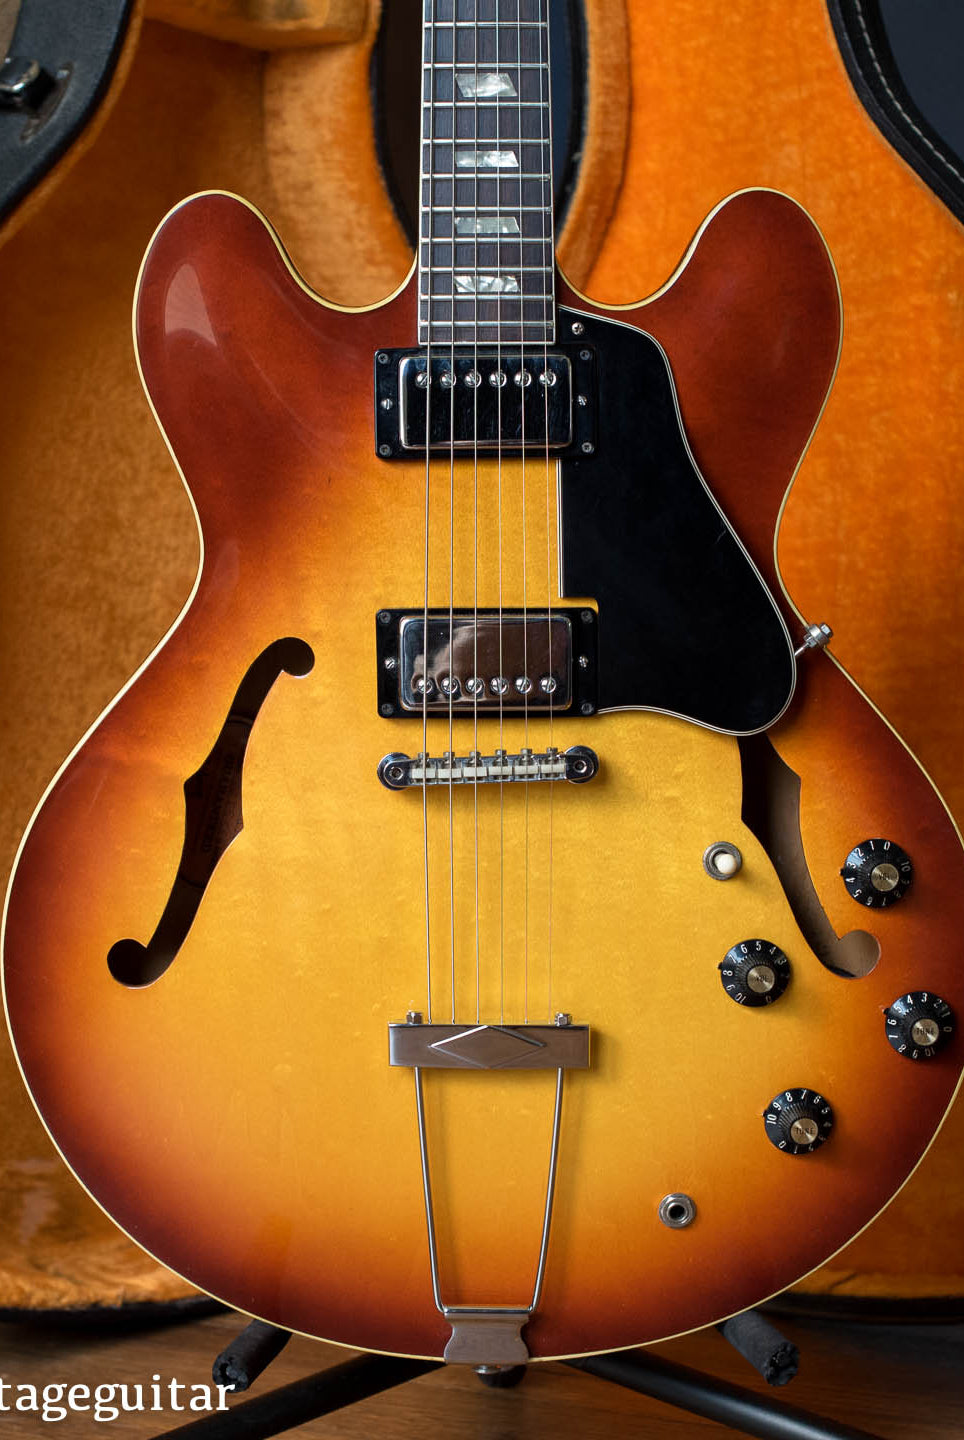 1969 Gibson ES-335 electric guitar